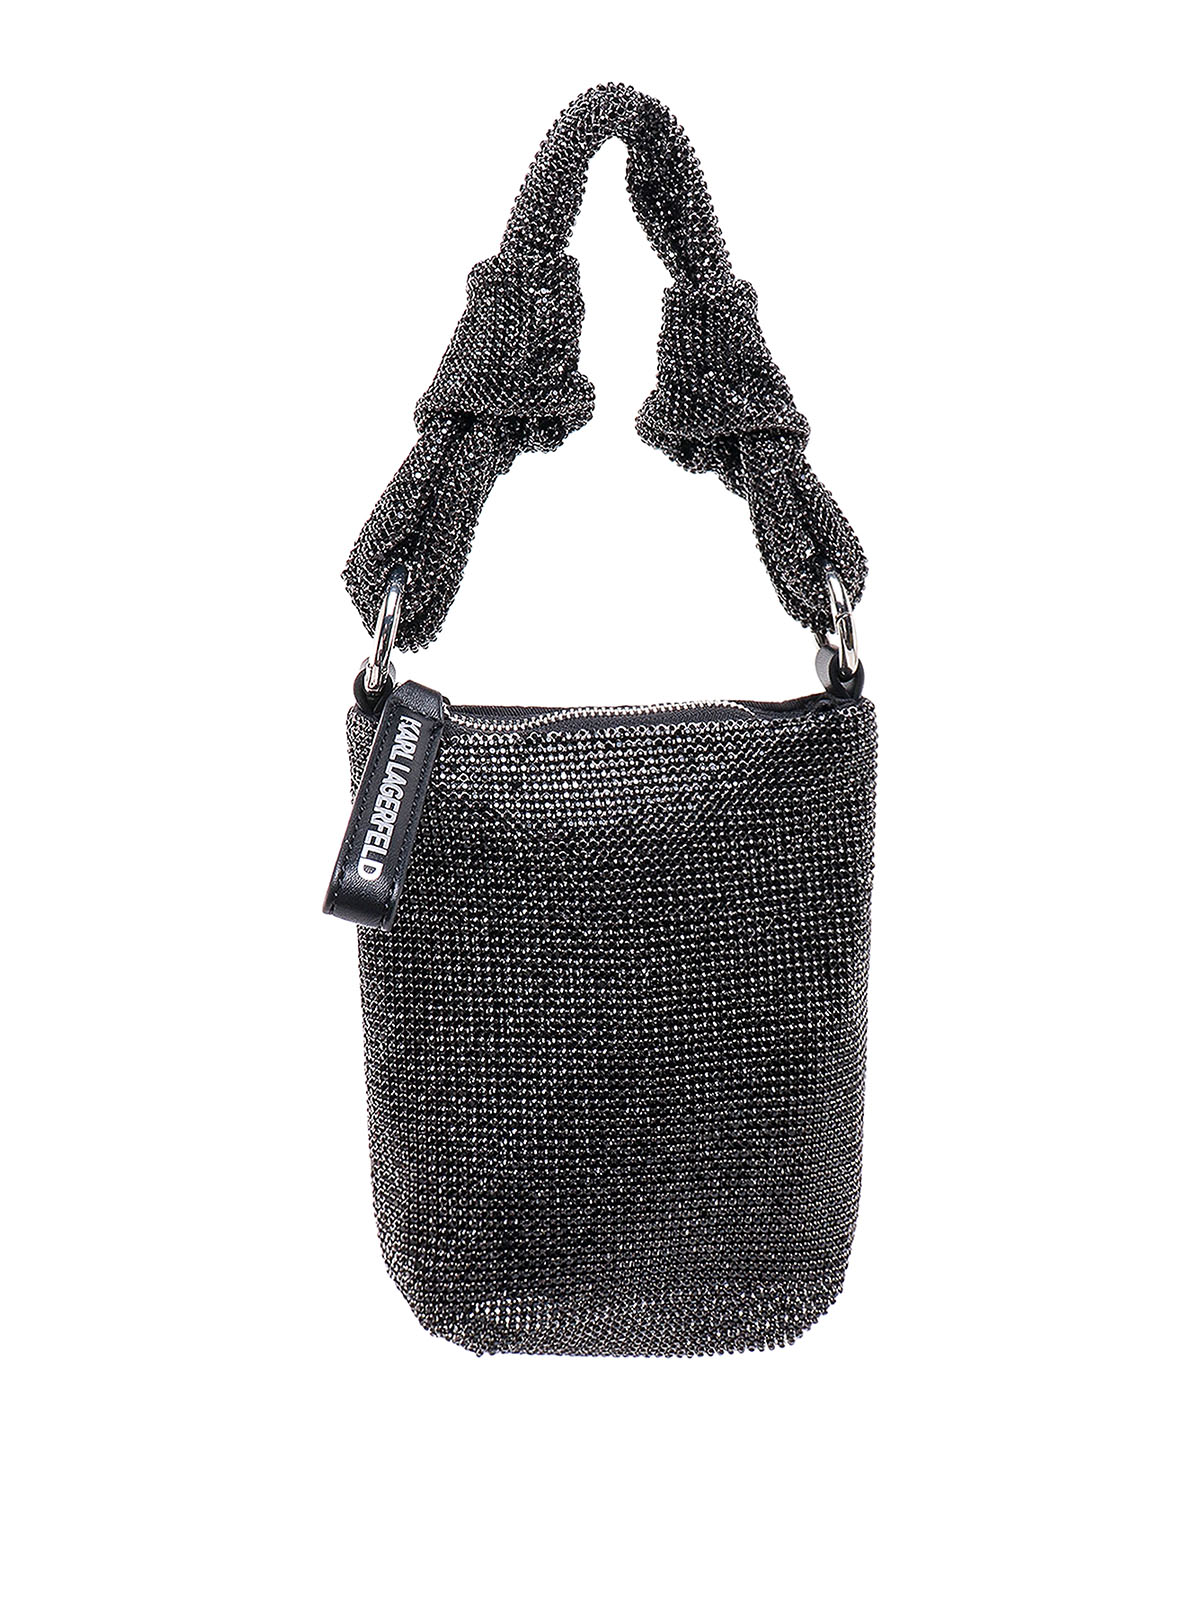 Karl Lagerfeld Handbag With All-over Rhinestones In Black